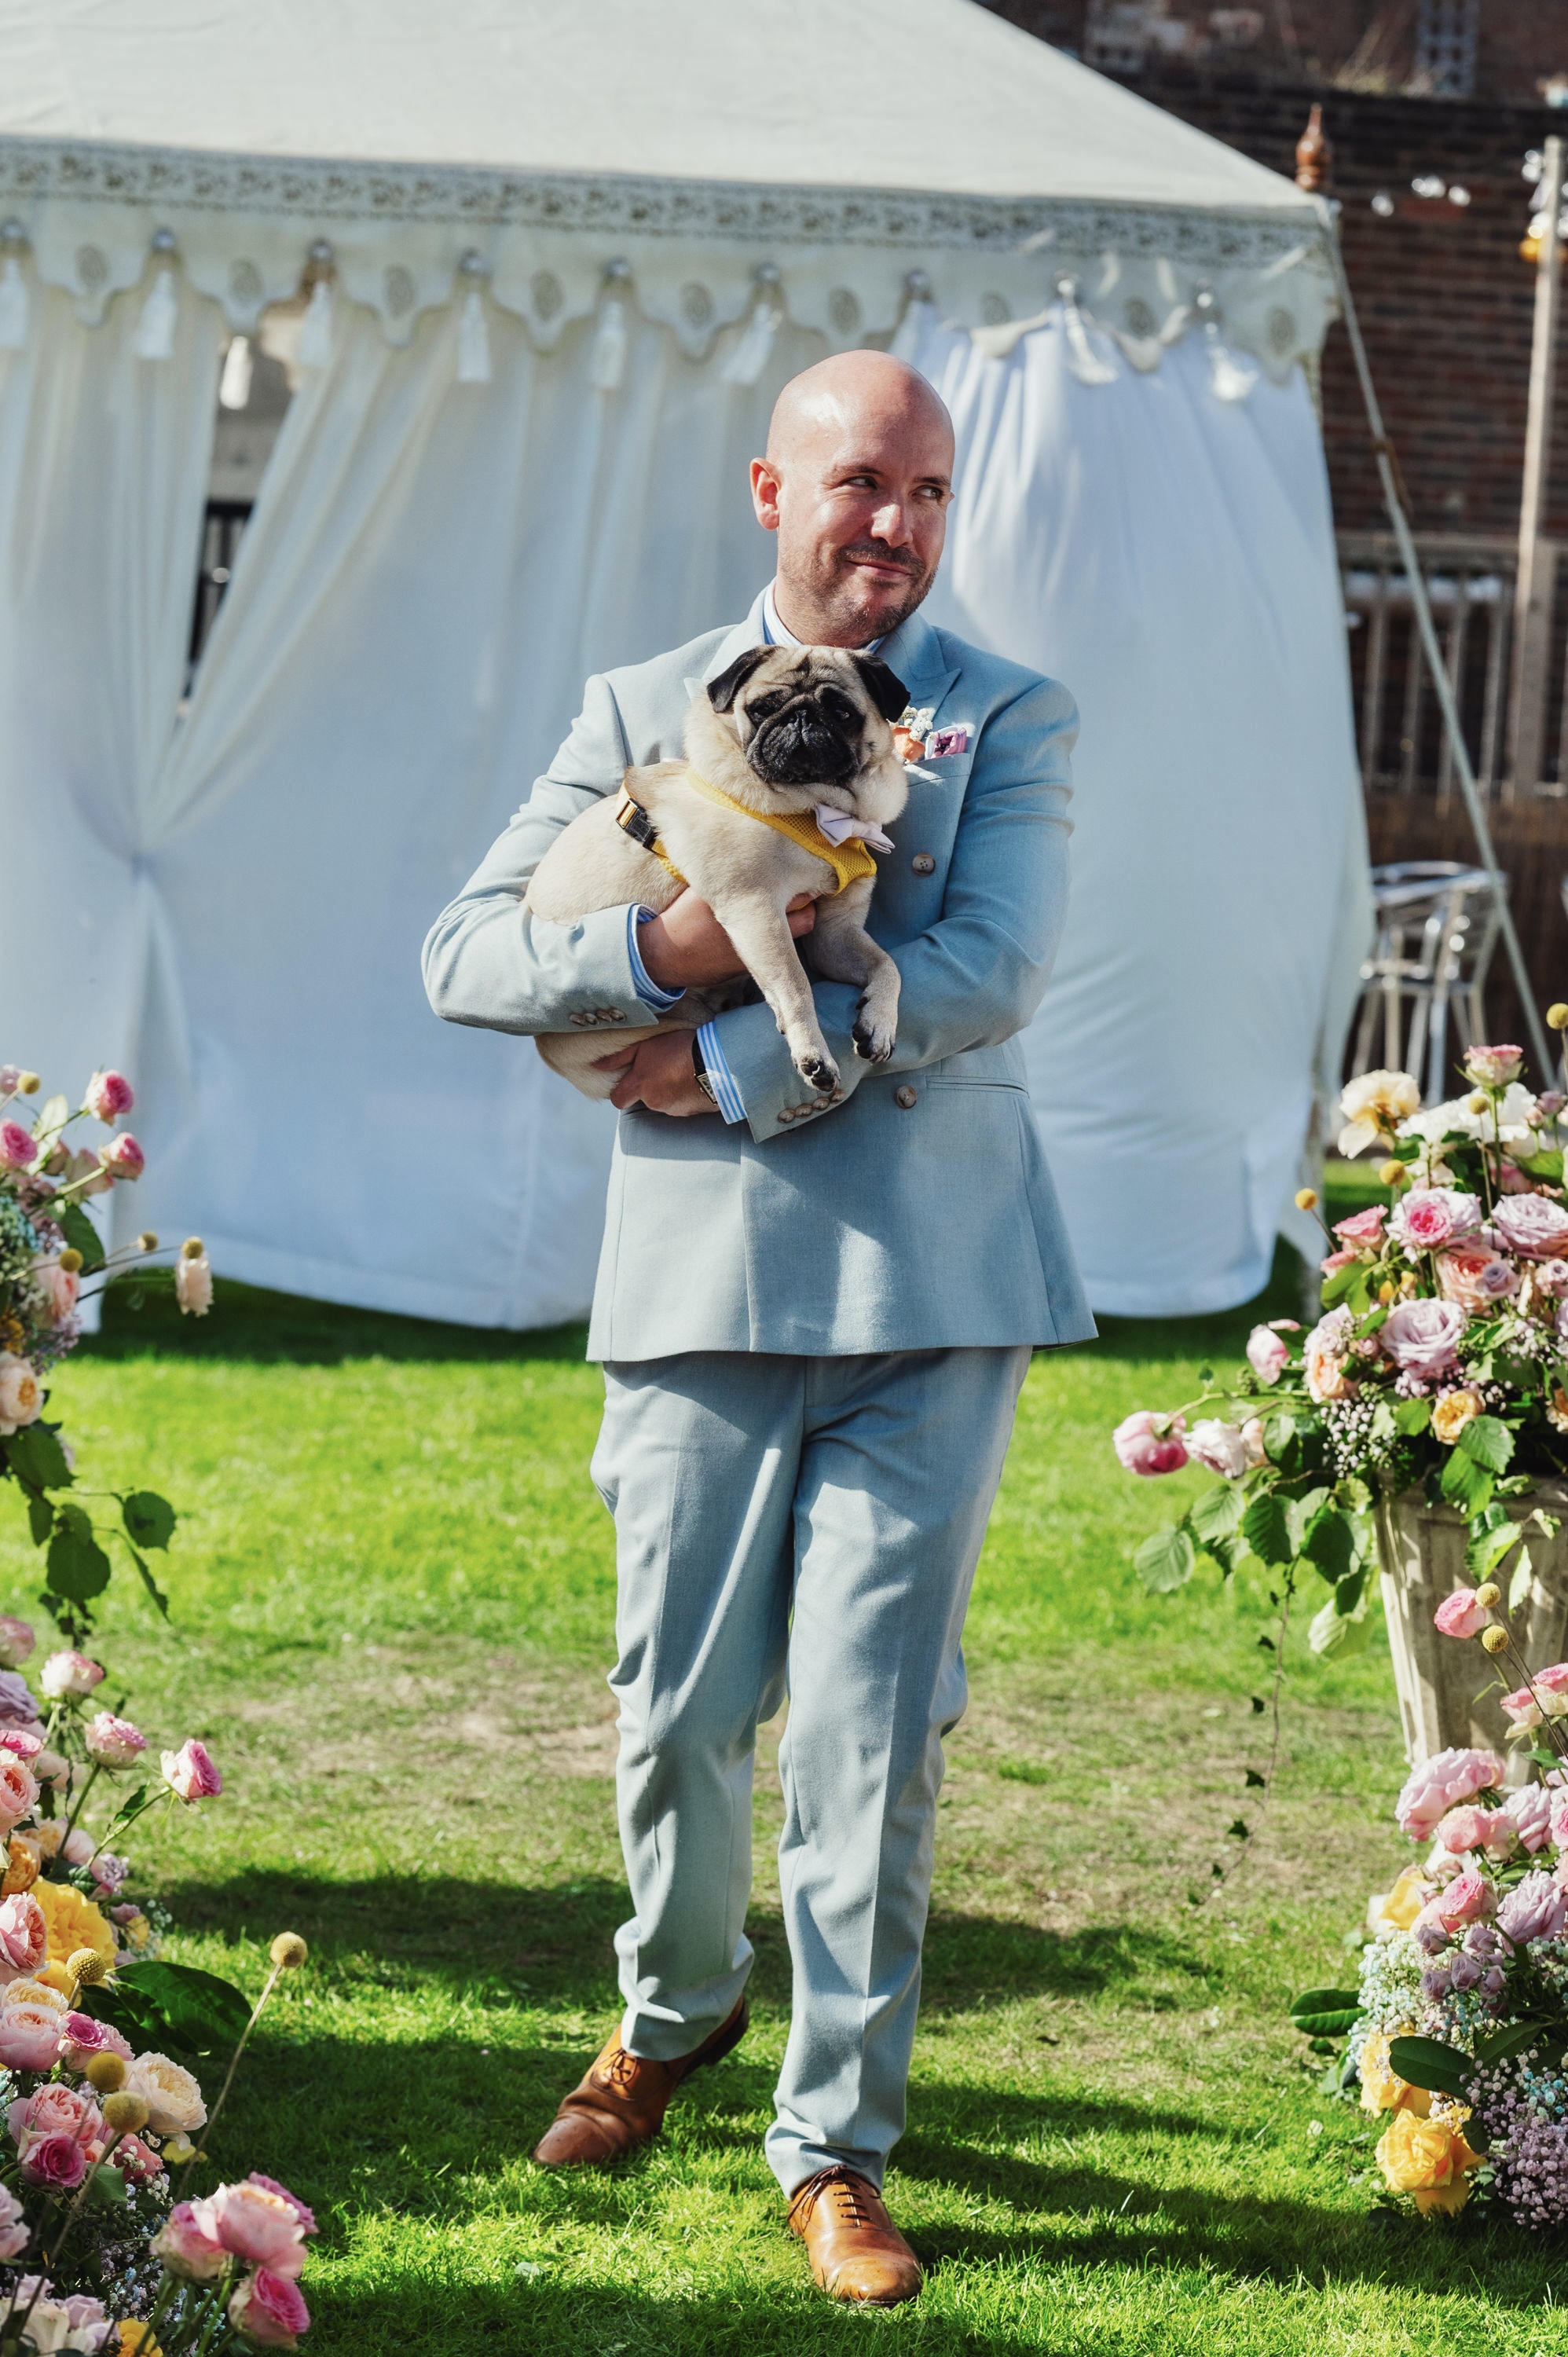 Tom Allen’s Big gay wedding and Egg the pug ring bearer 